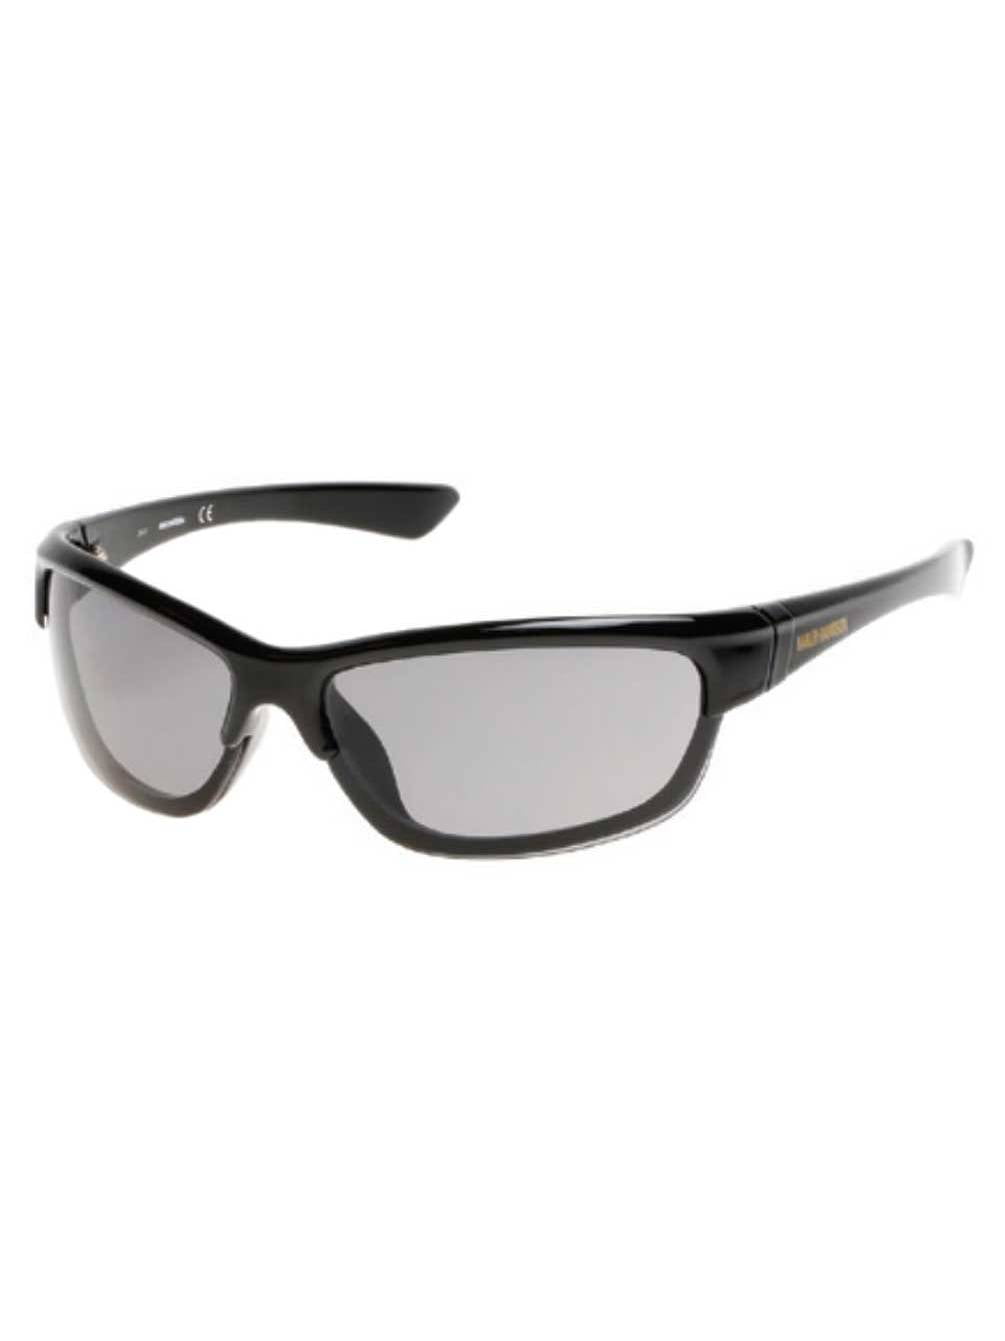 Harley-Davidson Men's Sporty Sunglasses, Shiny Black Frame & Smoke Gray